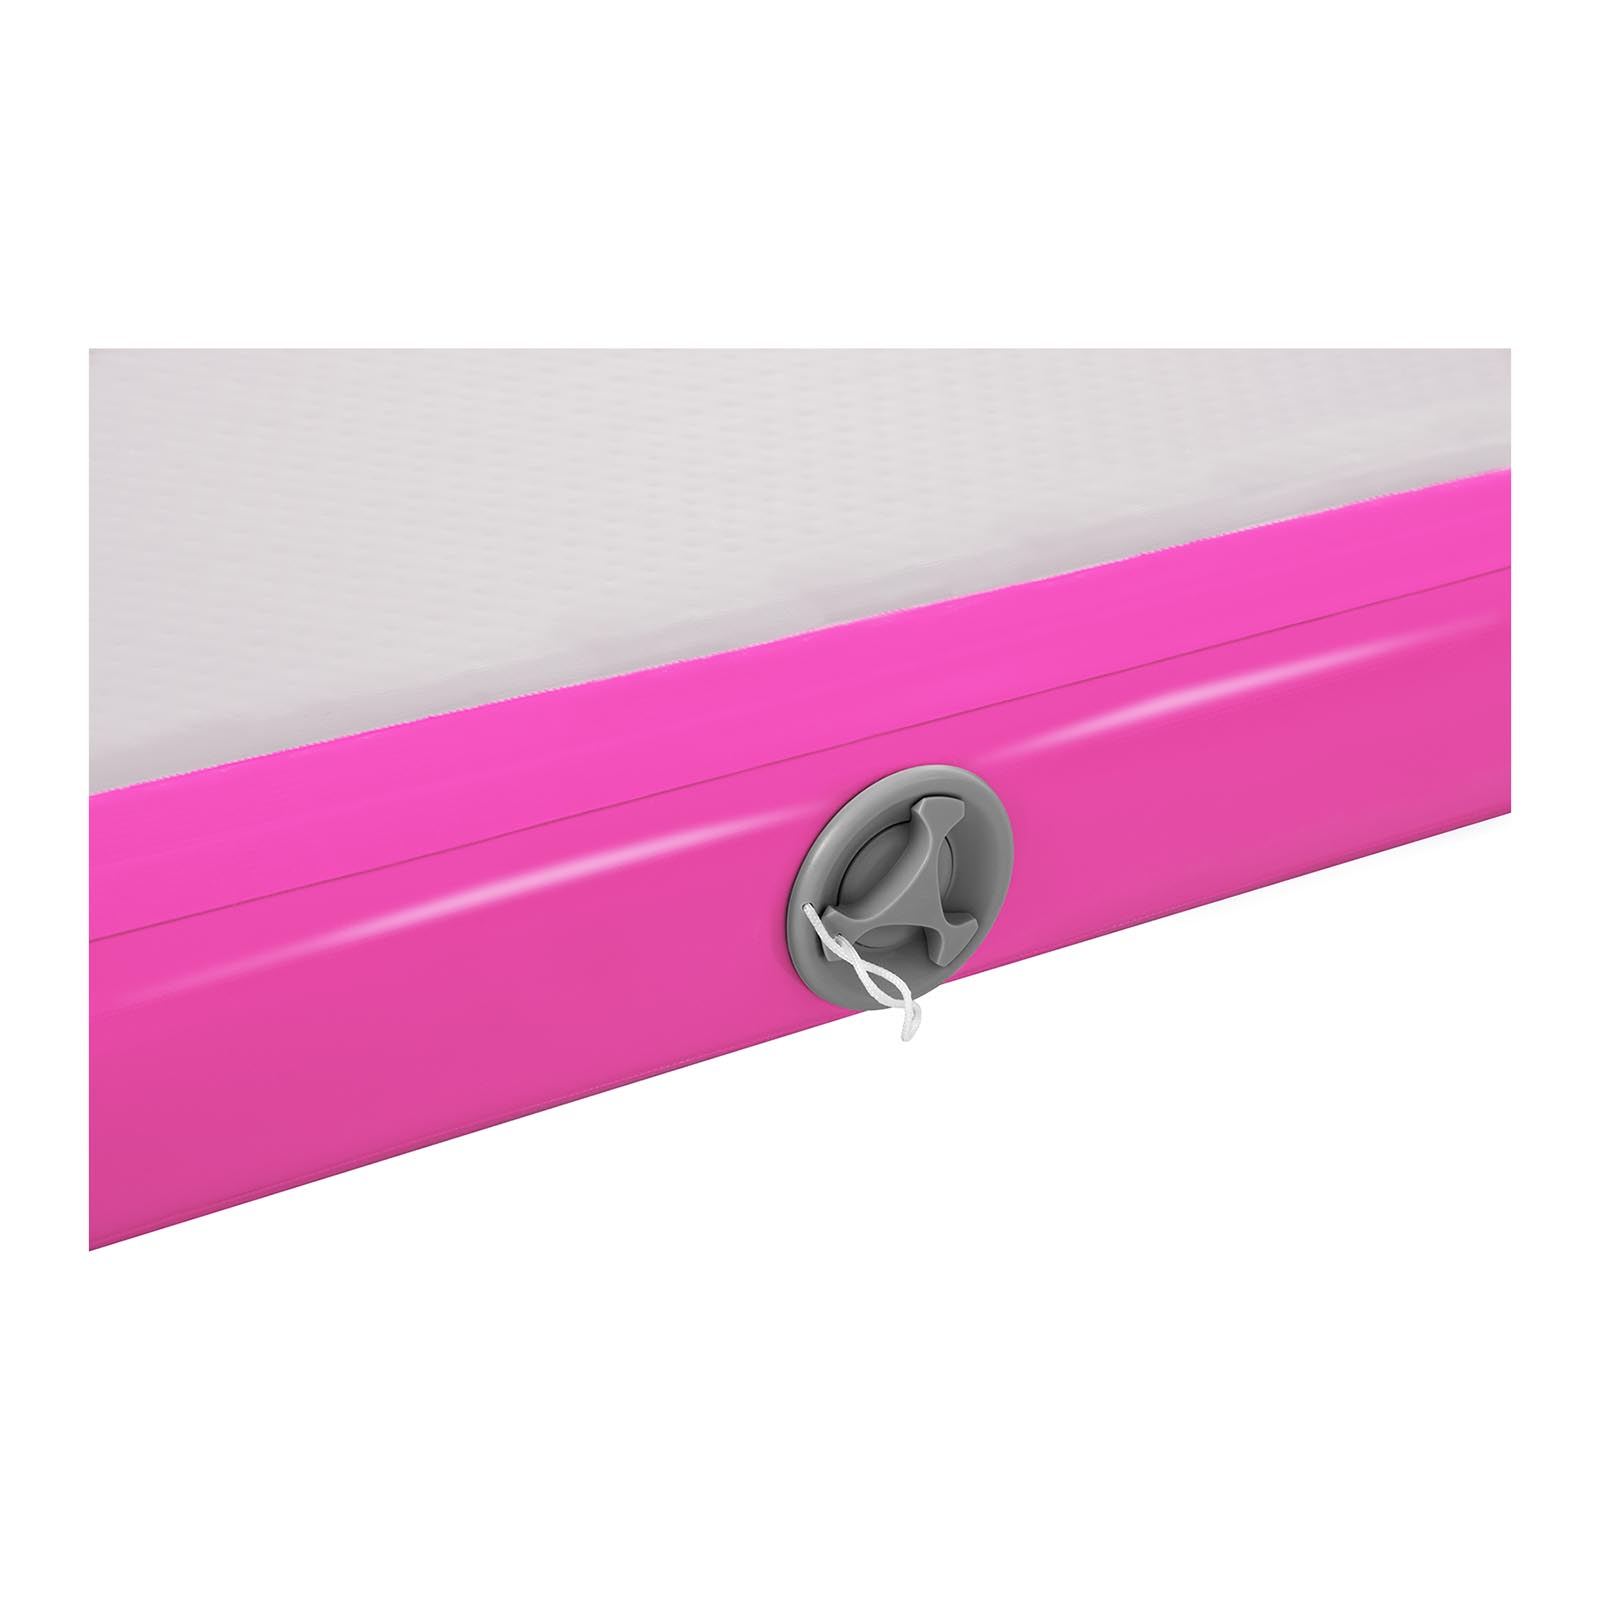 Set Aufblasbare Turnmatte inklusive Luftpumpe - 300 x 100 x 10 cm - 150 kg - pink/grau